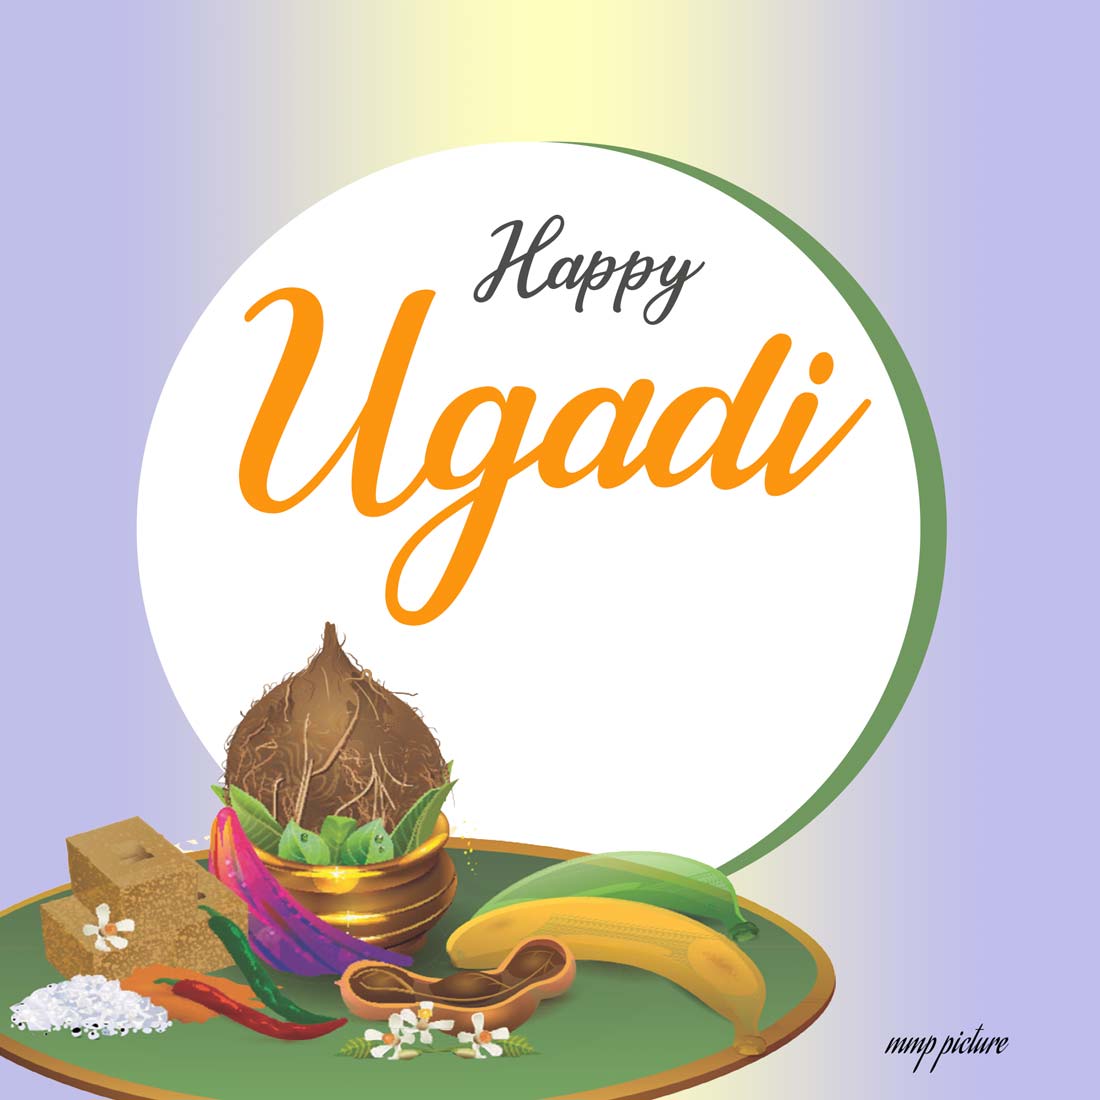 Happy Ugadi » MMP PICTURE